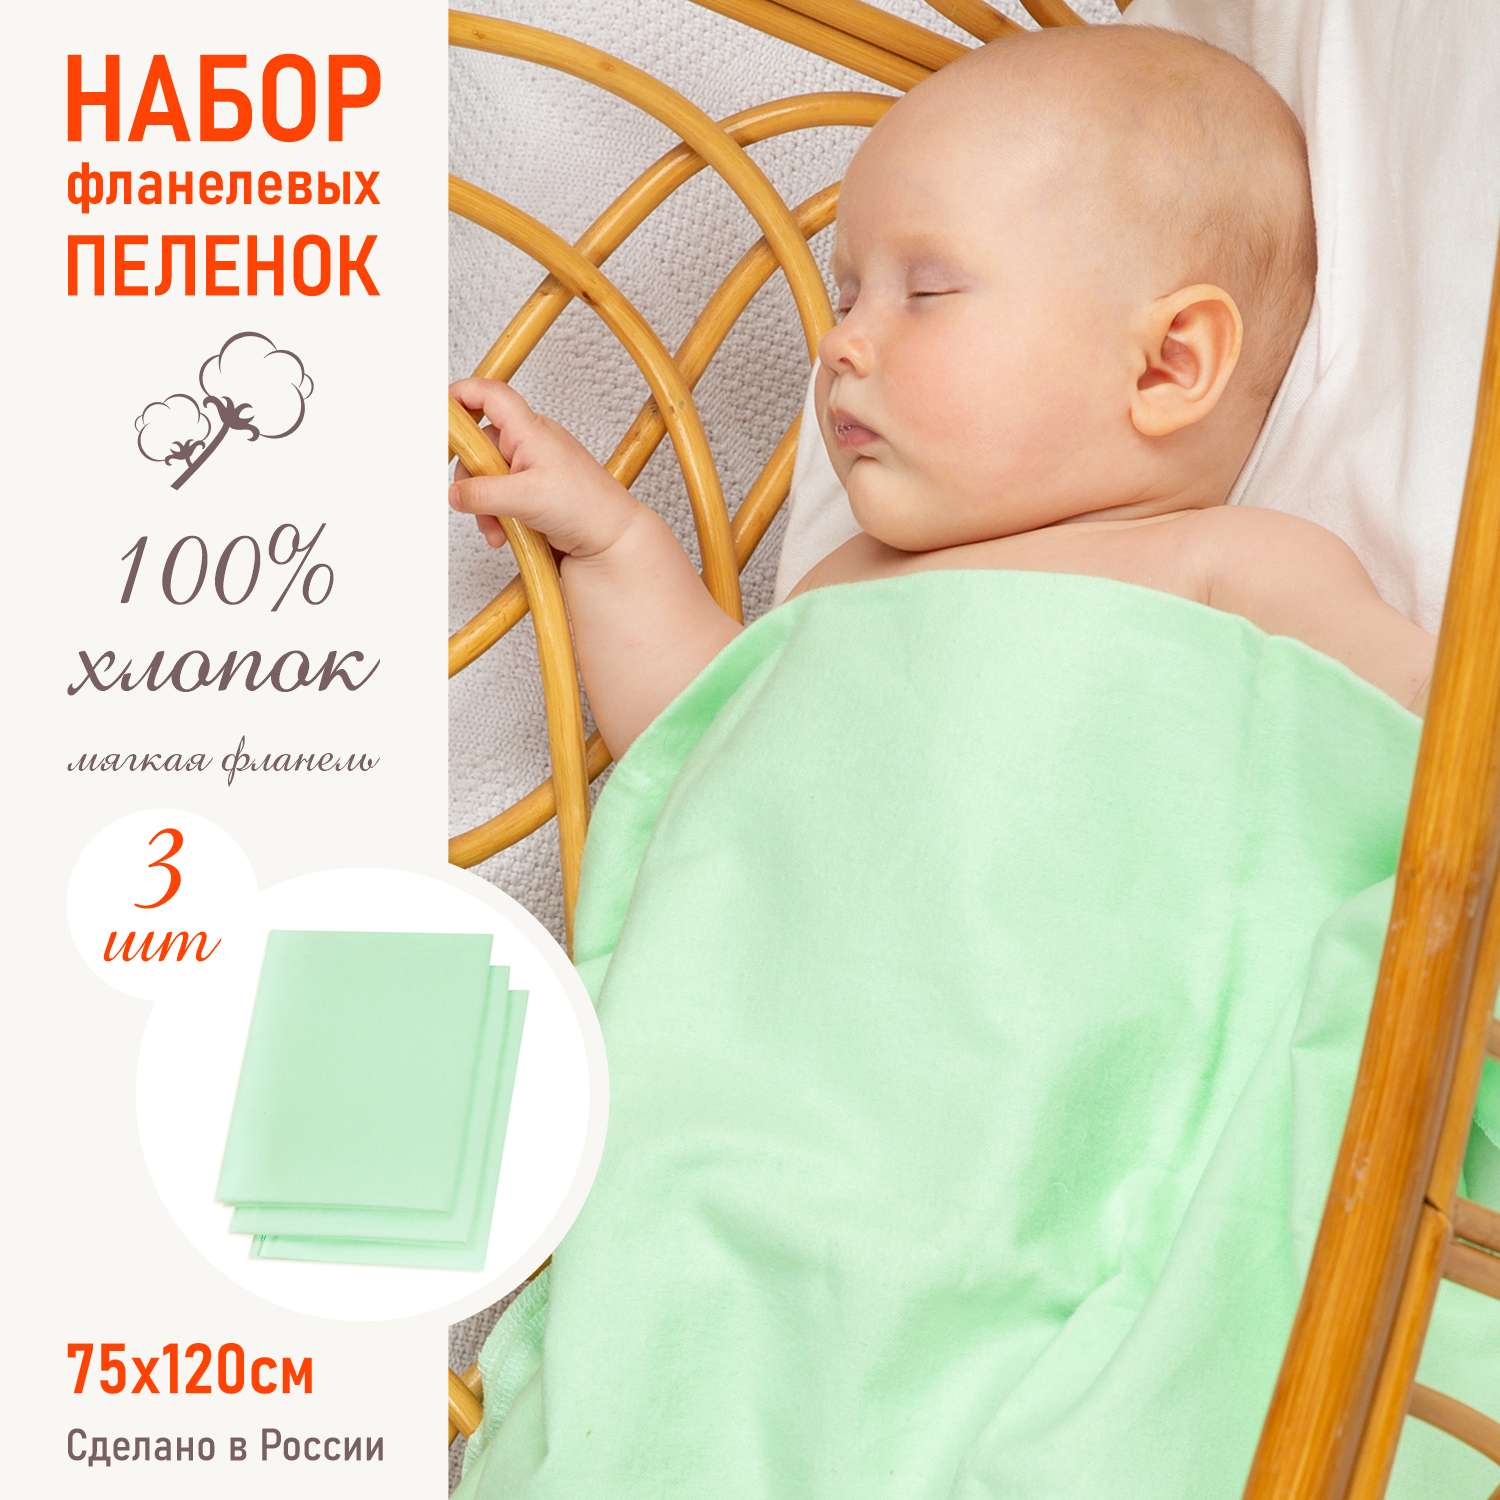 Пеленка фланелевая Чудо-чадо для новорожденных «Гамма» фисташковый 75х120см 3 шт - фото 1